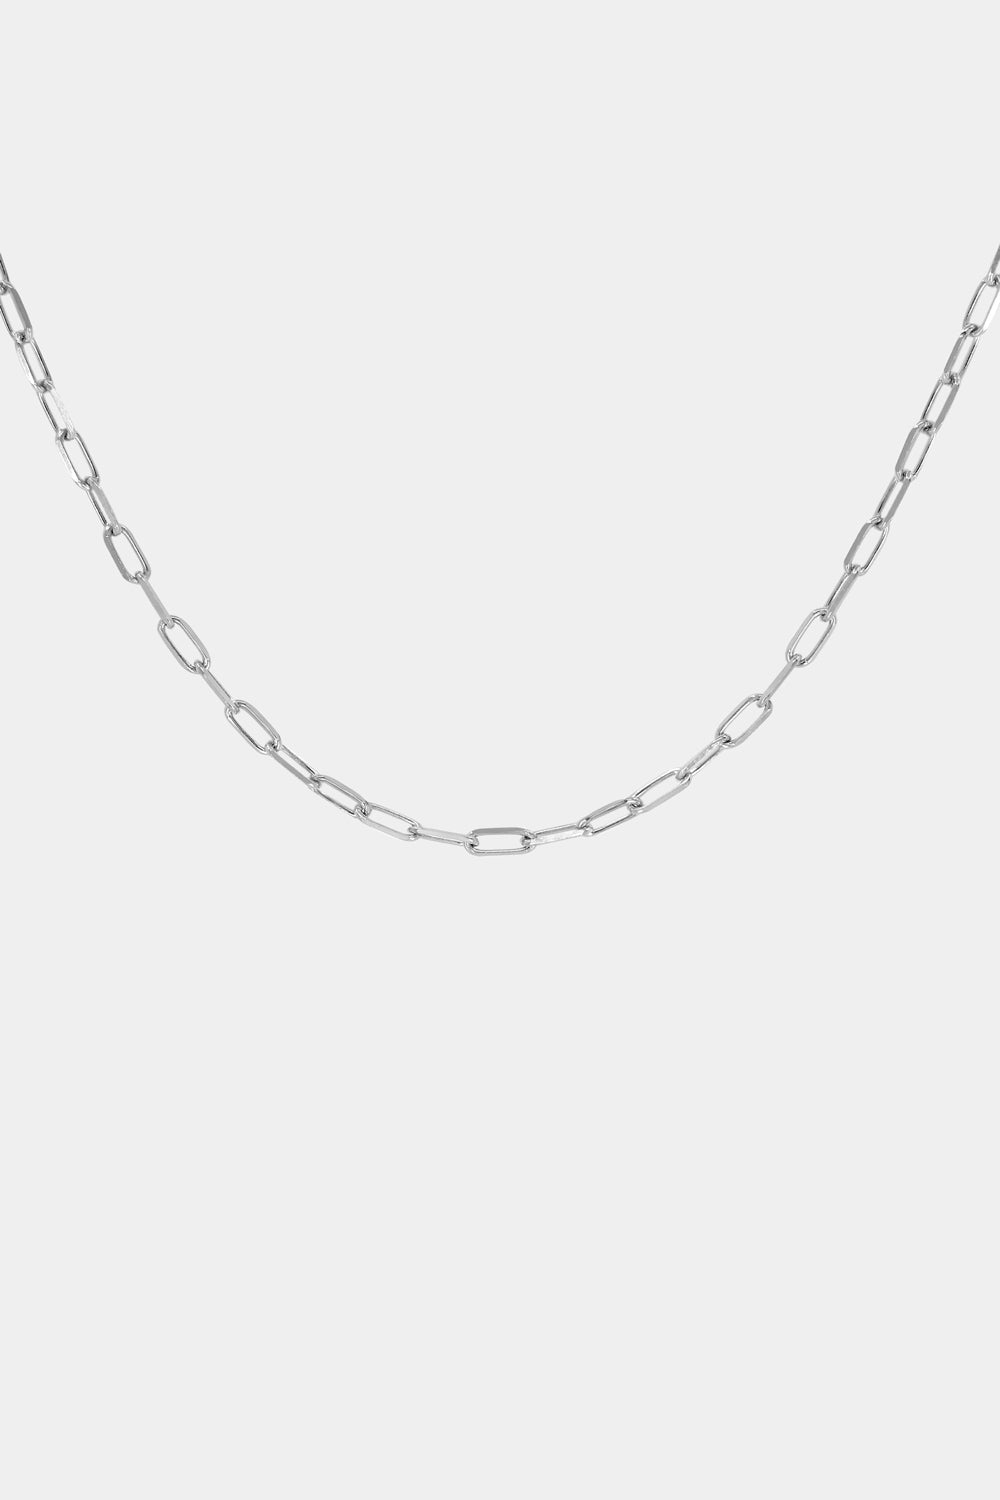 Mina Necklace | Silver or 9K White, More Options Available| Natasha Schweitzer